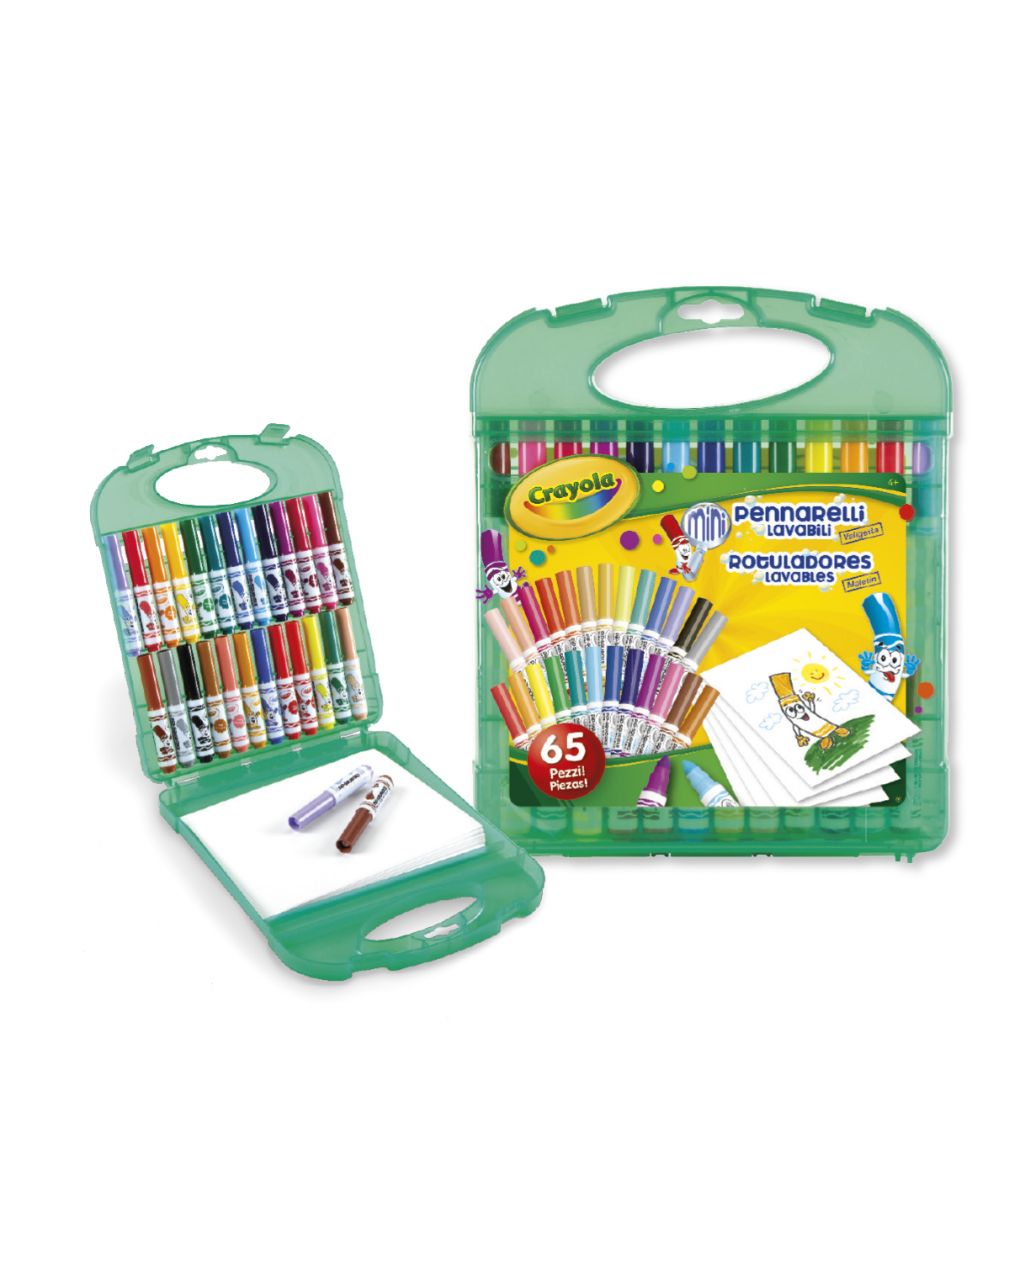 Crayola - set pennarelli lavabili - Crayola